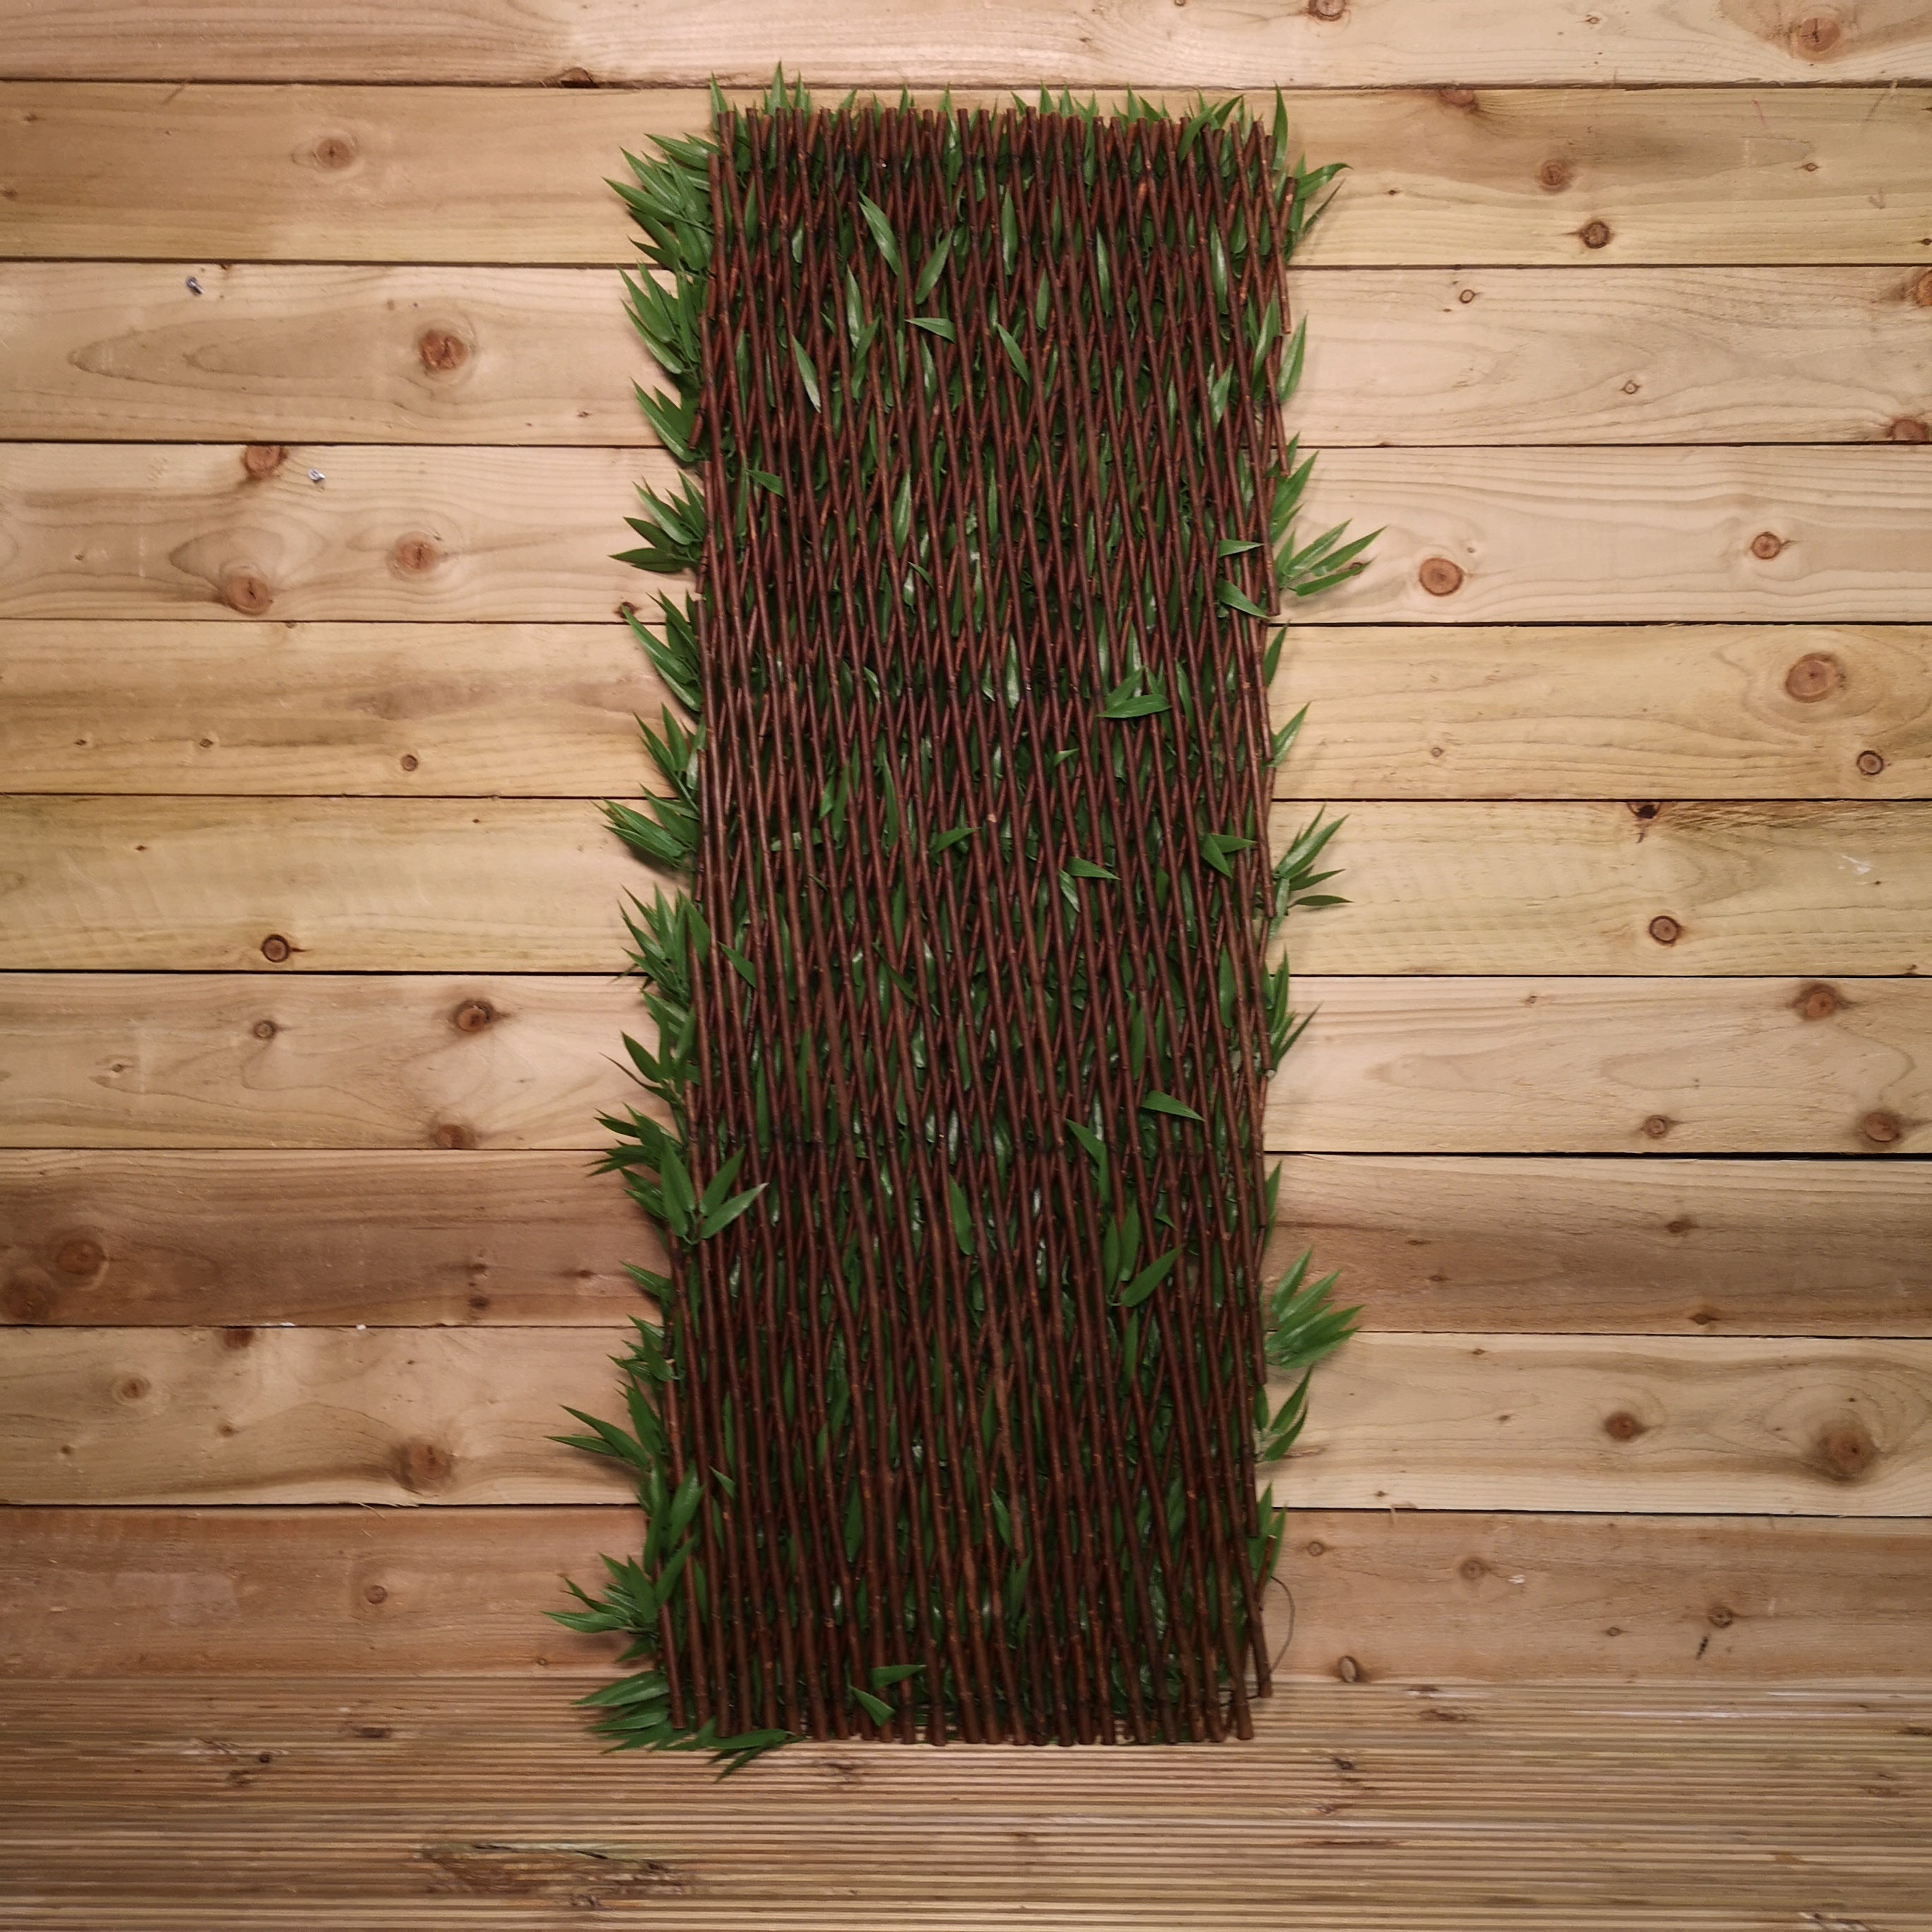 100cm x 200cm Artificial Fence Garden Trellis Privacy Screening Indoor Outdoor Wall Panel - Bamboo Leaf